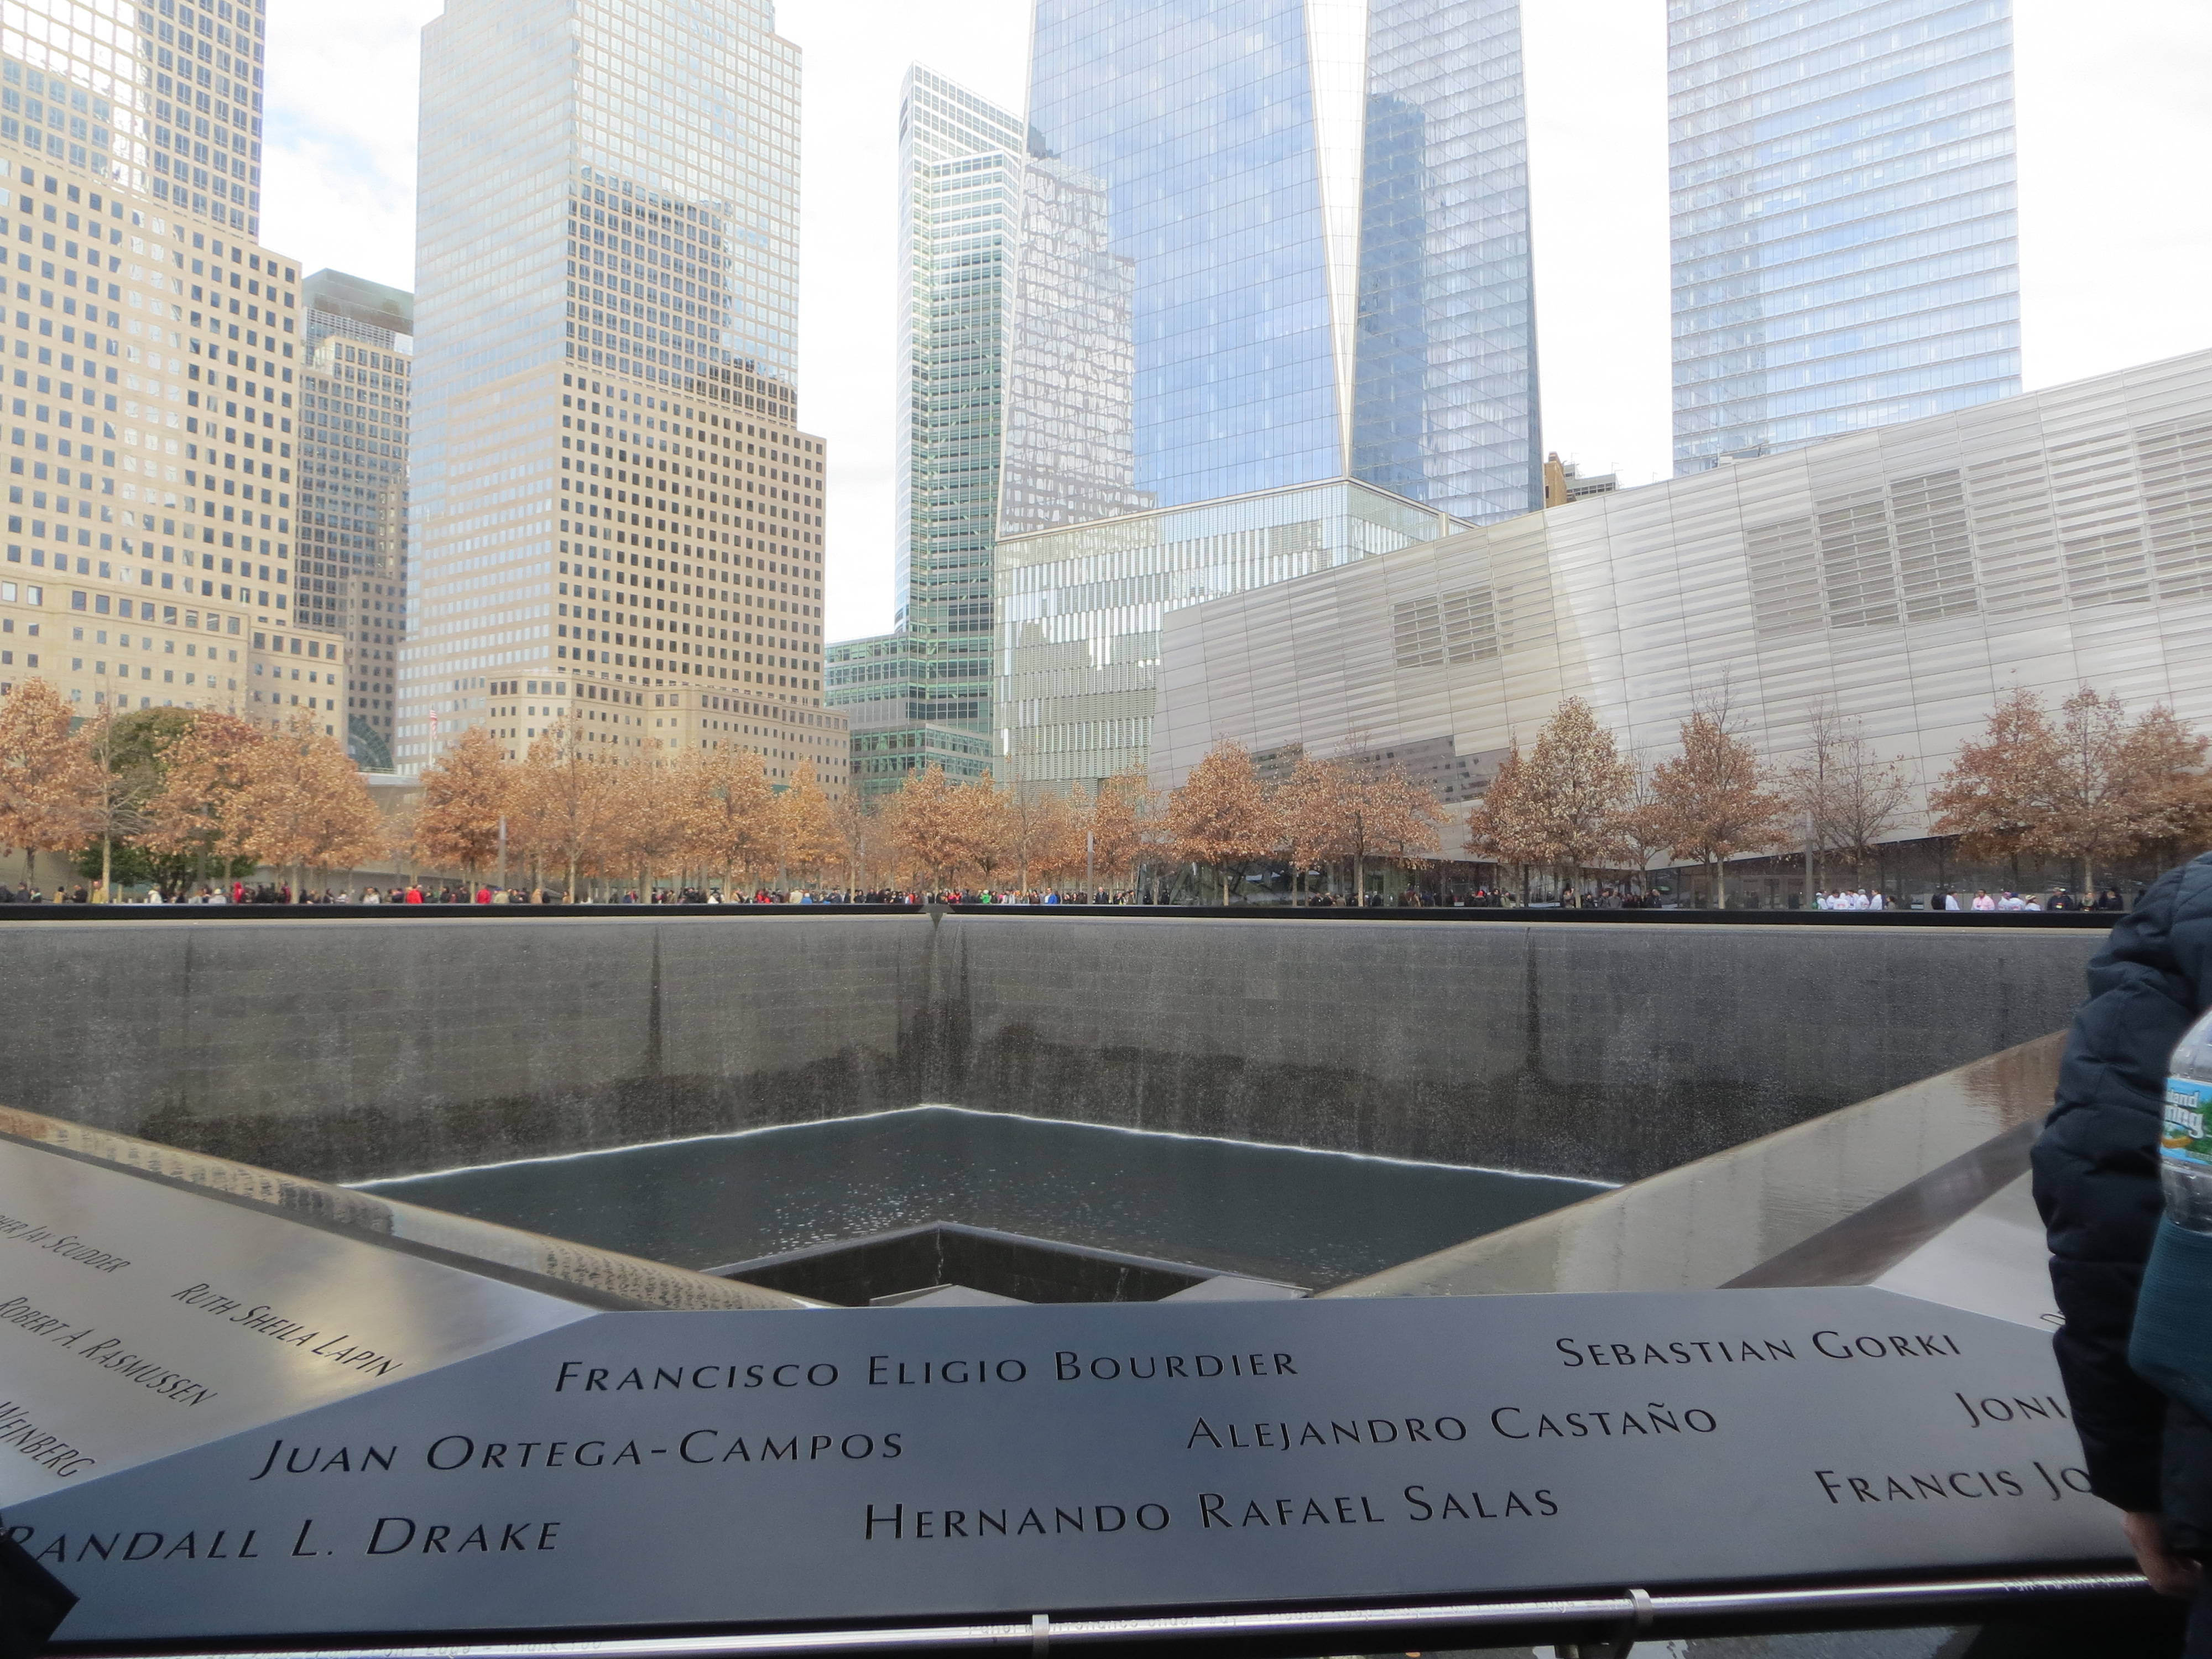 september 11 remembrance images